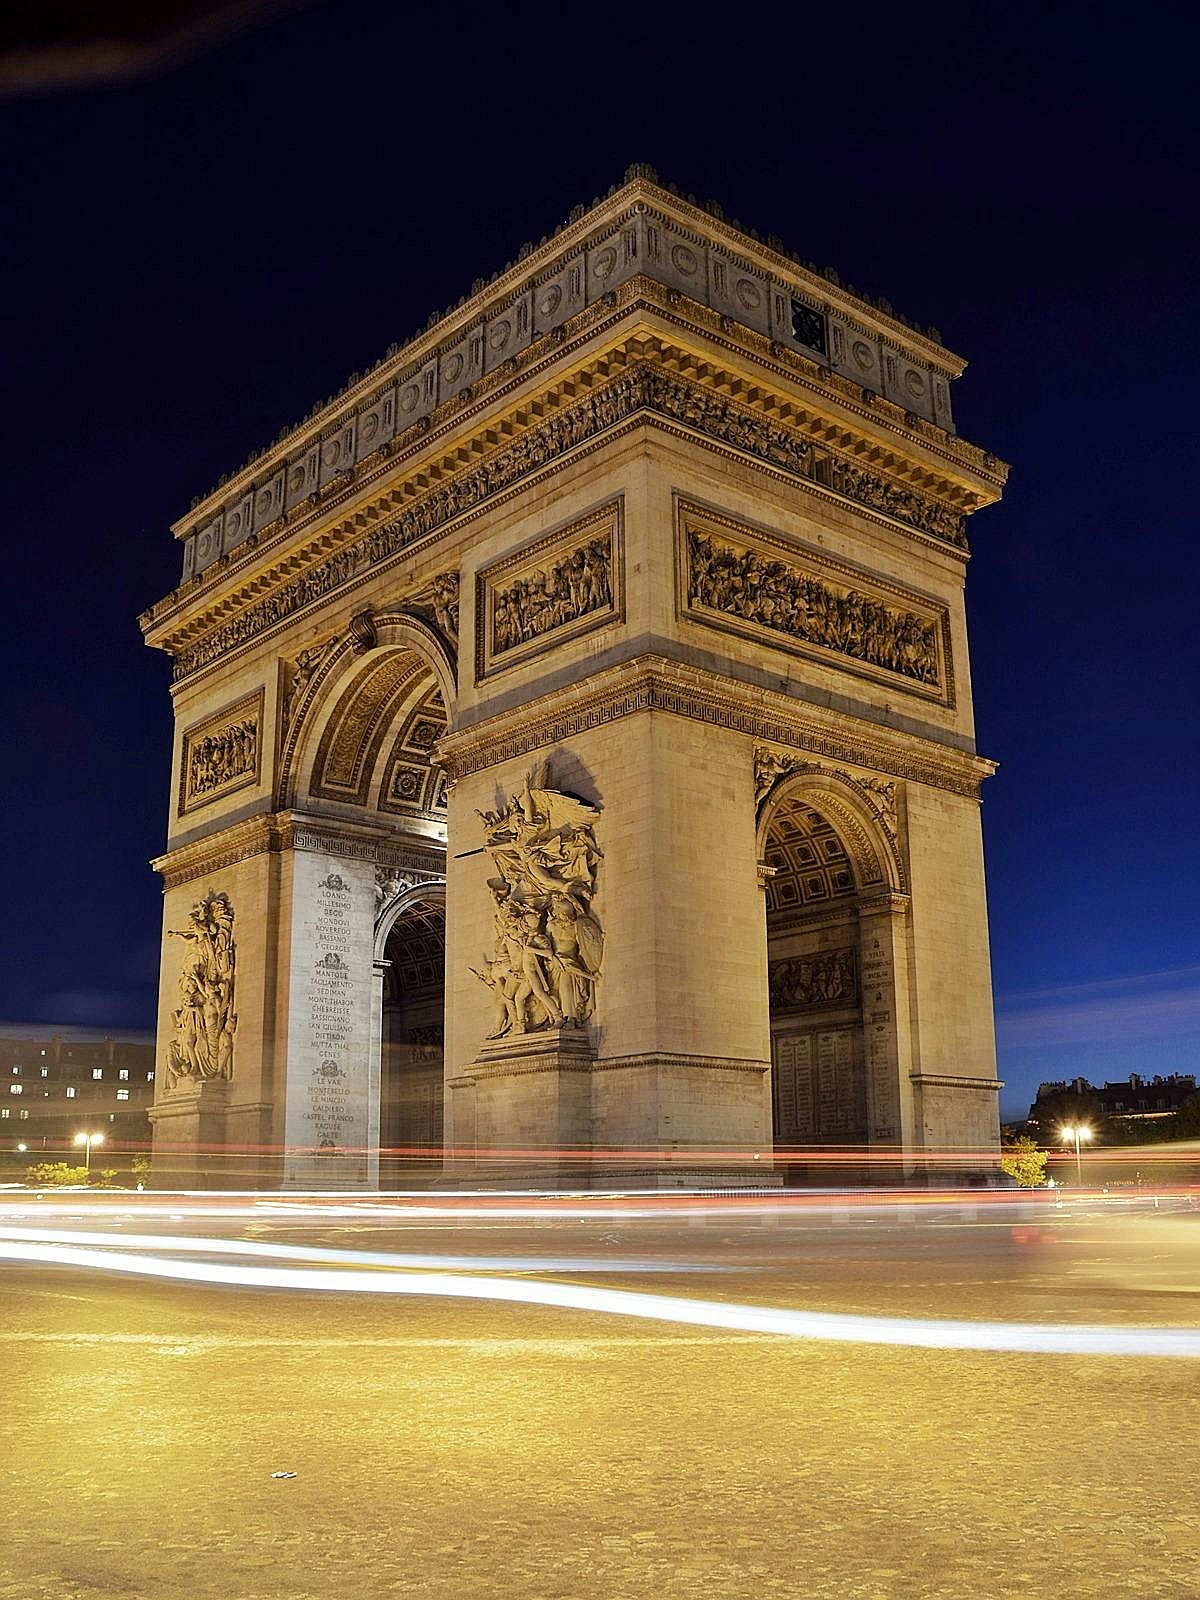  Paris
- pexels-pixabay-2344.jpg